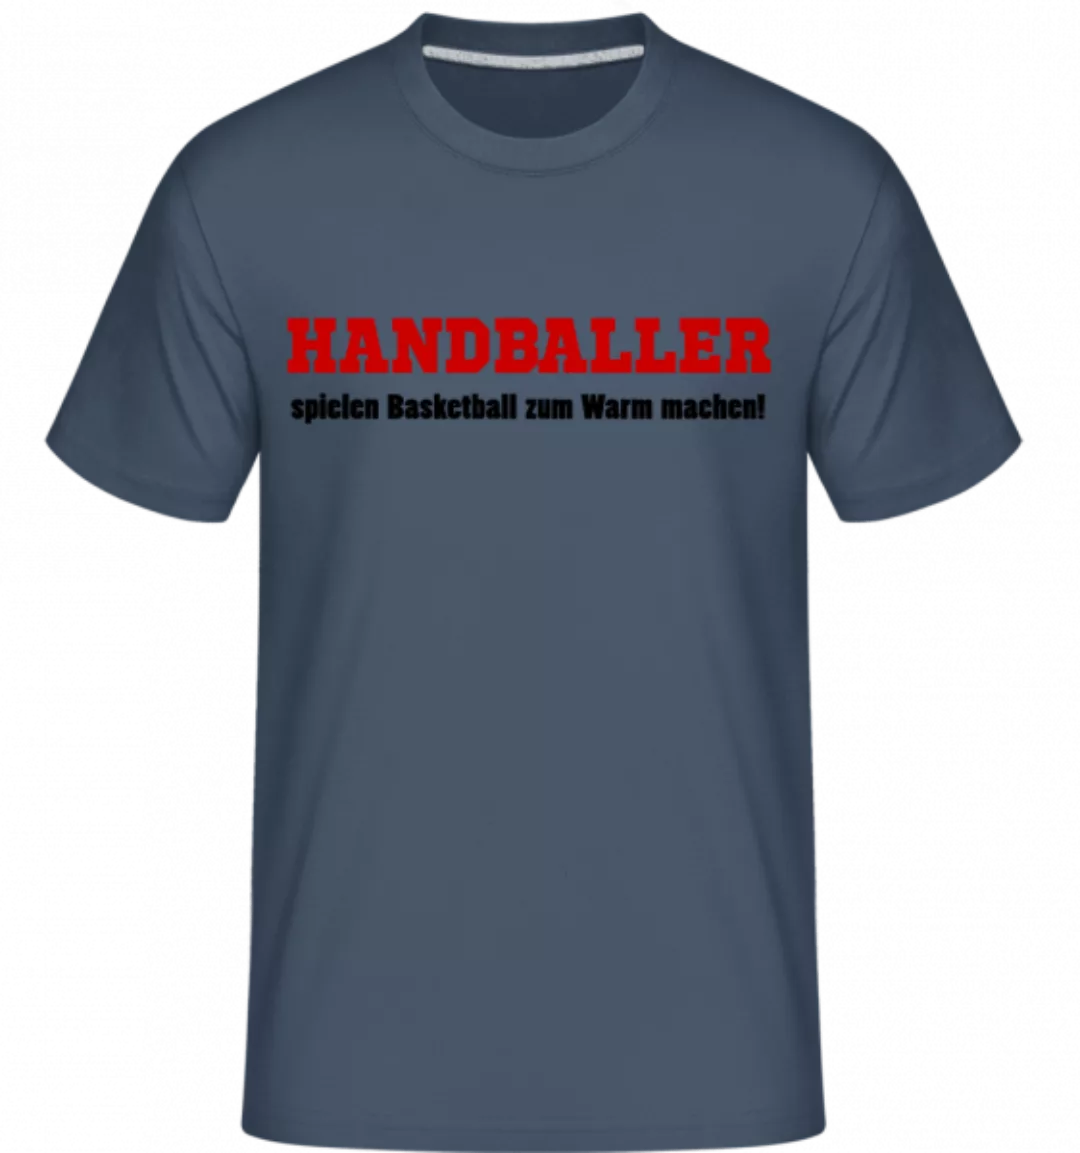 Handballer Spielen Basketball Zum Warm Machen! · Shirtinator Männer T-Shirt günstig online kaufen